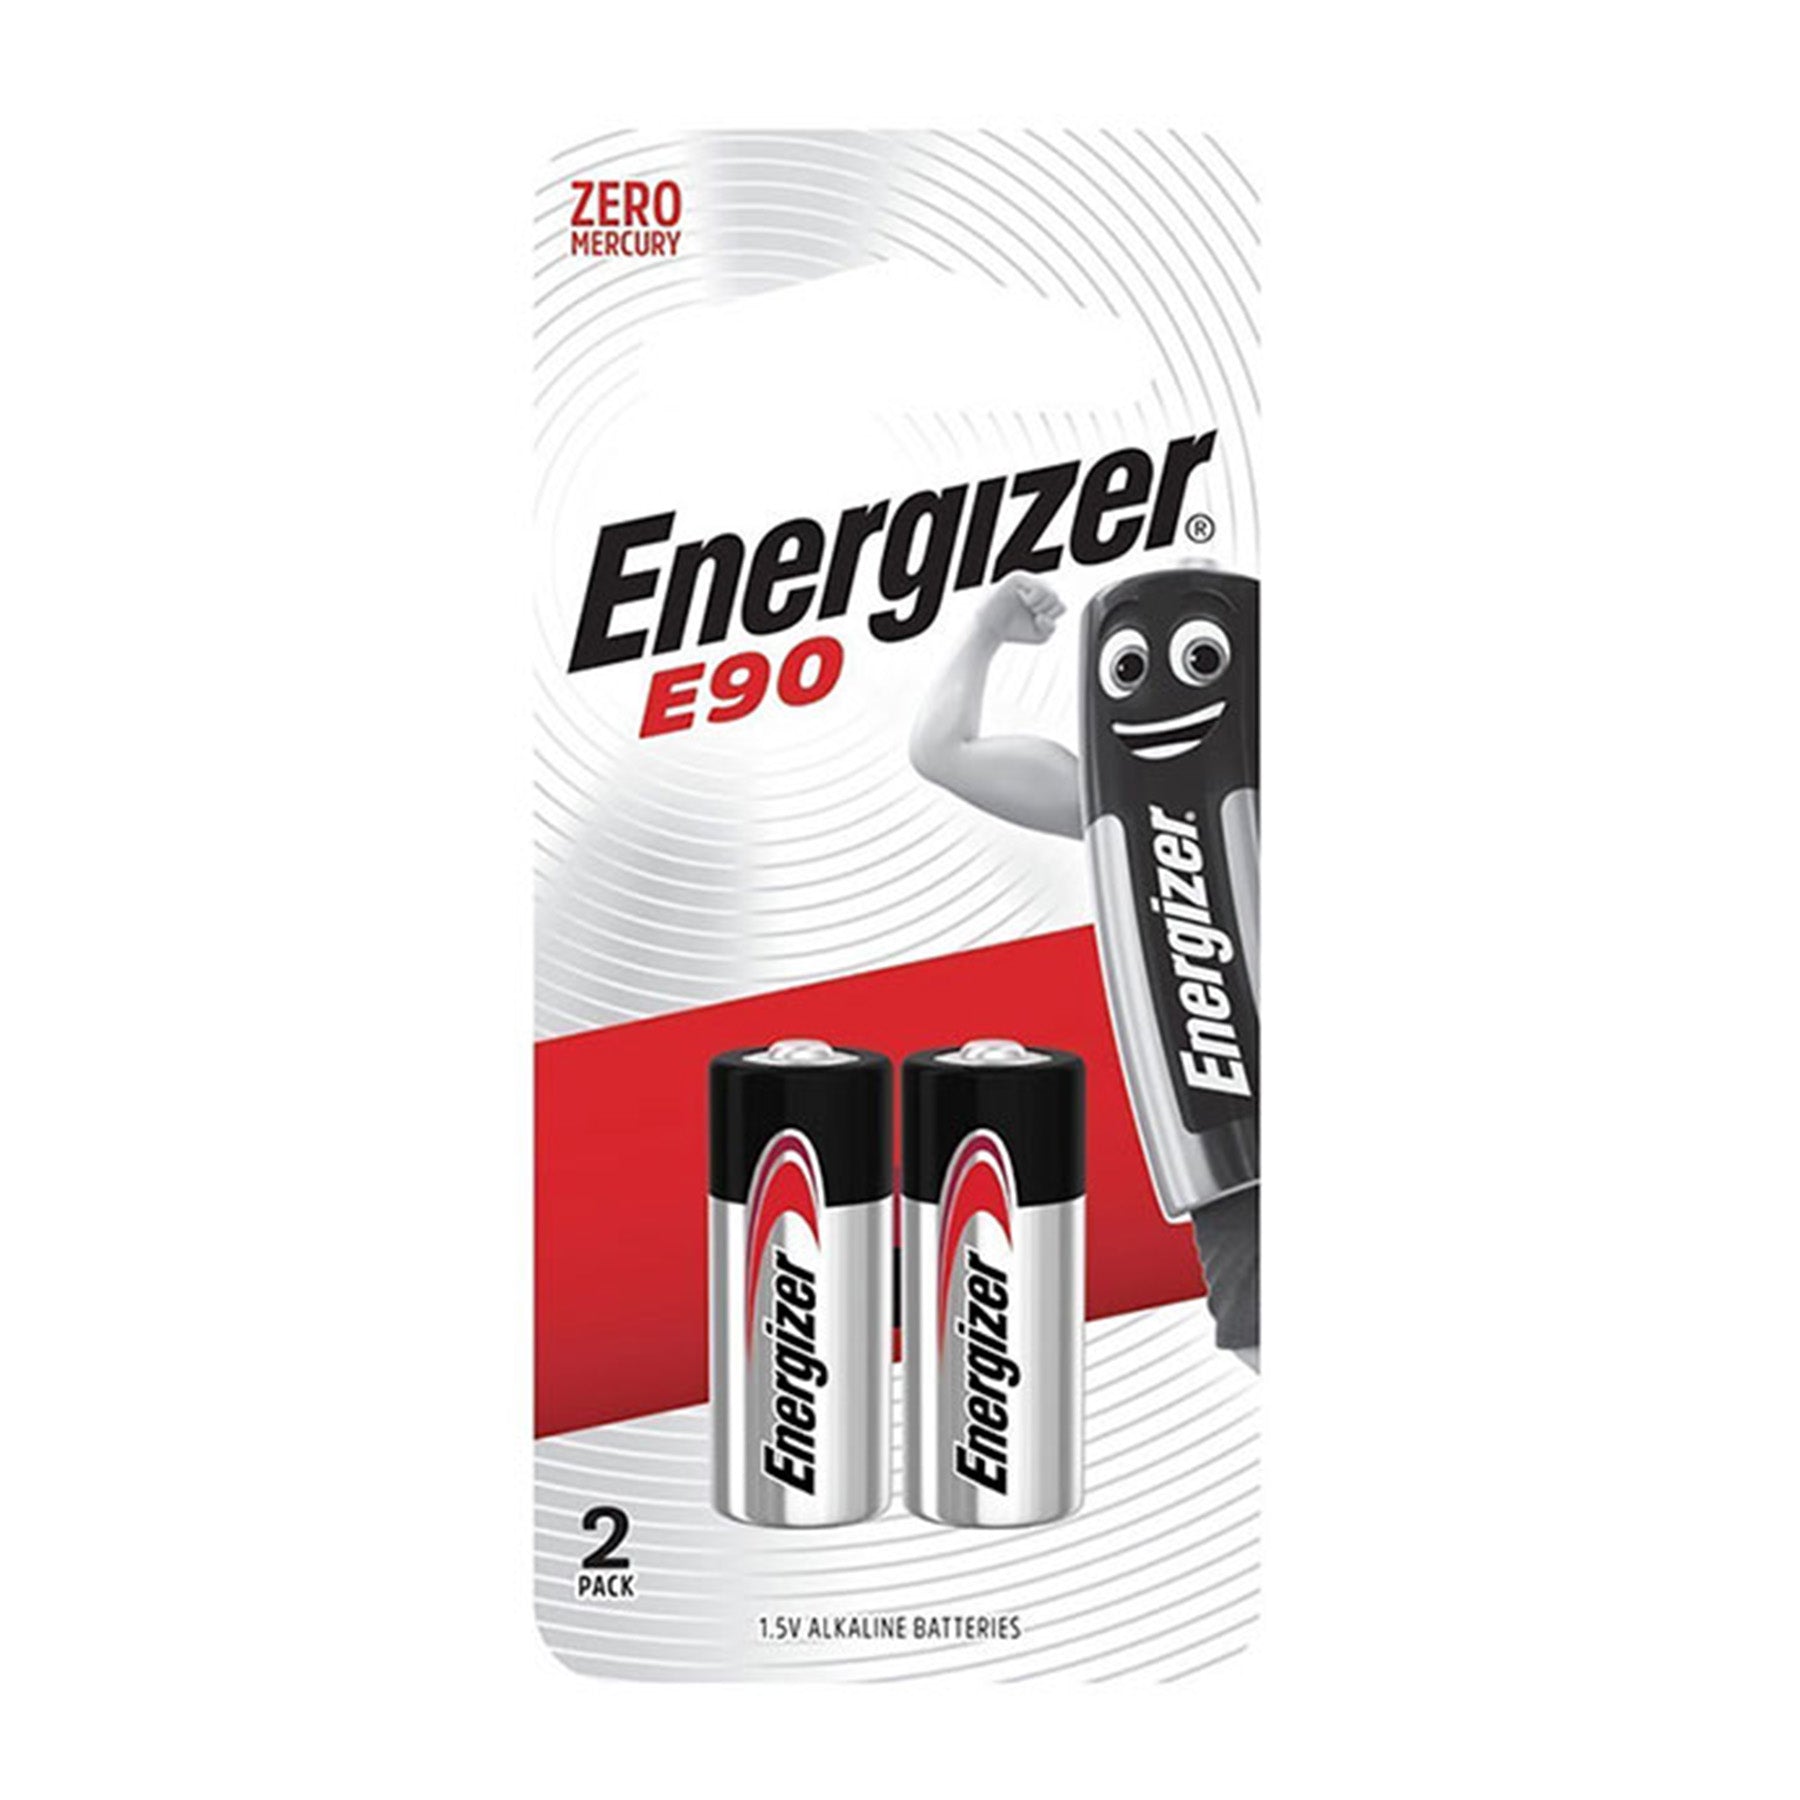 Energizer E90 Batteries - 2 PcsQuantity: 2 Pcs